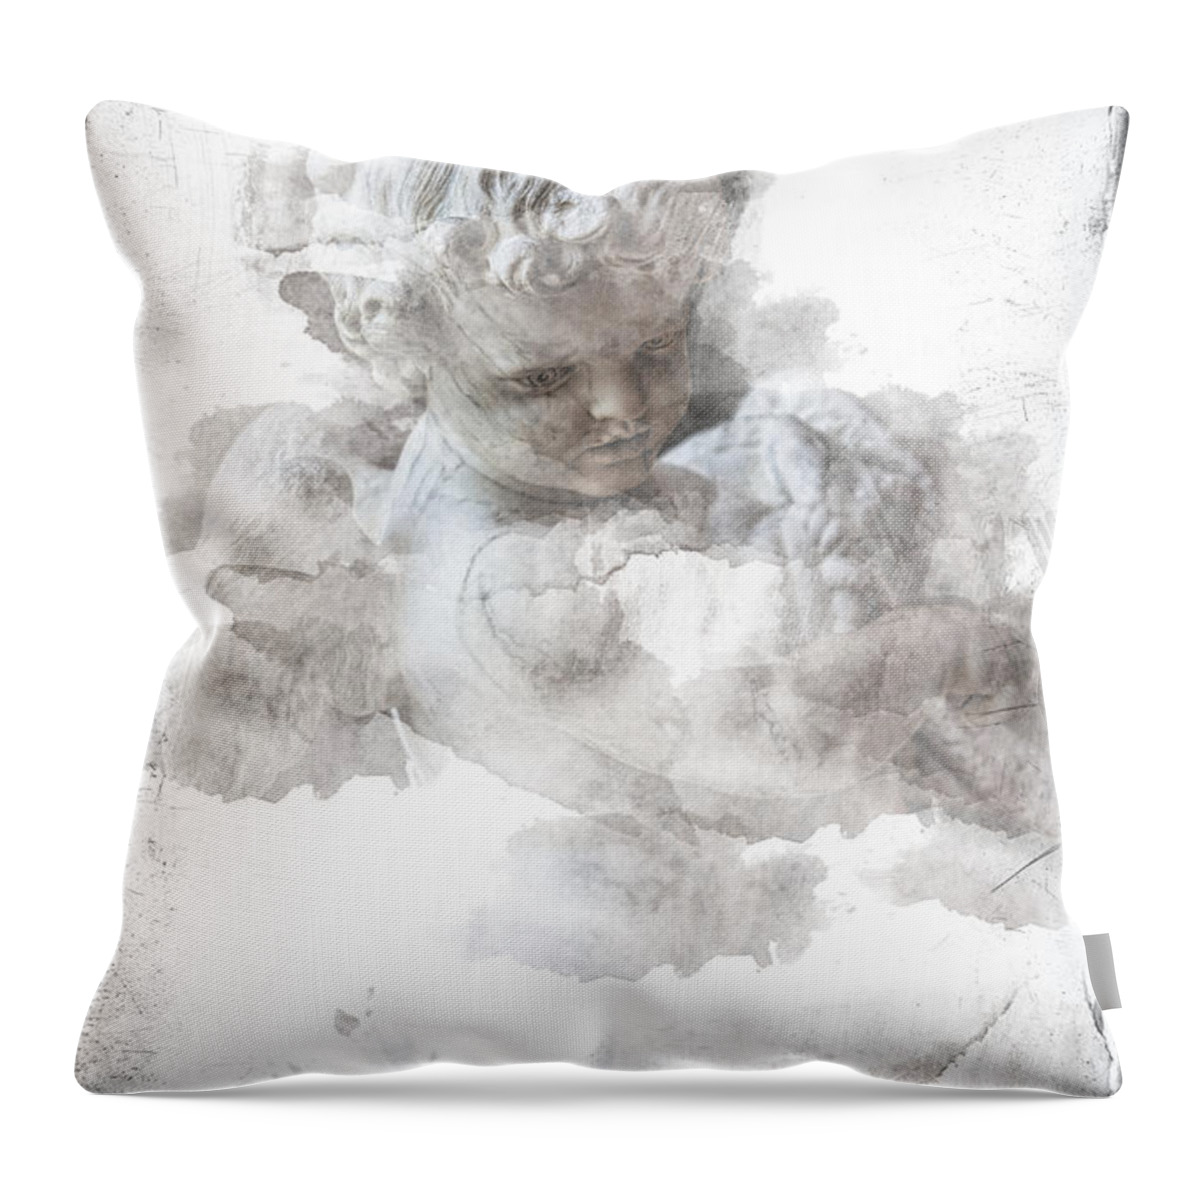 Cherub Throw Pillow featuring the photograph Child Cherub by Evie Carrier